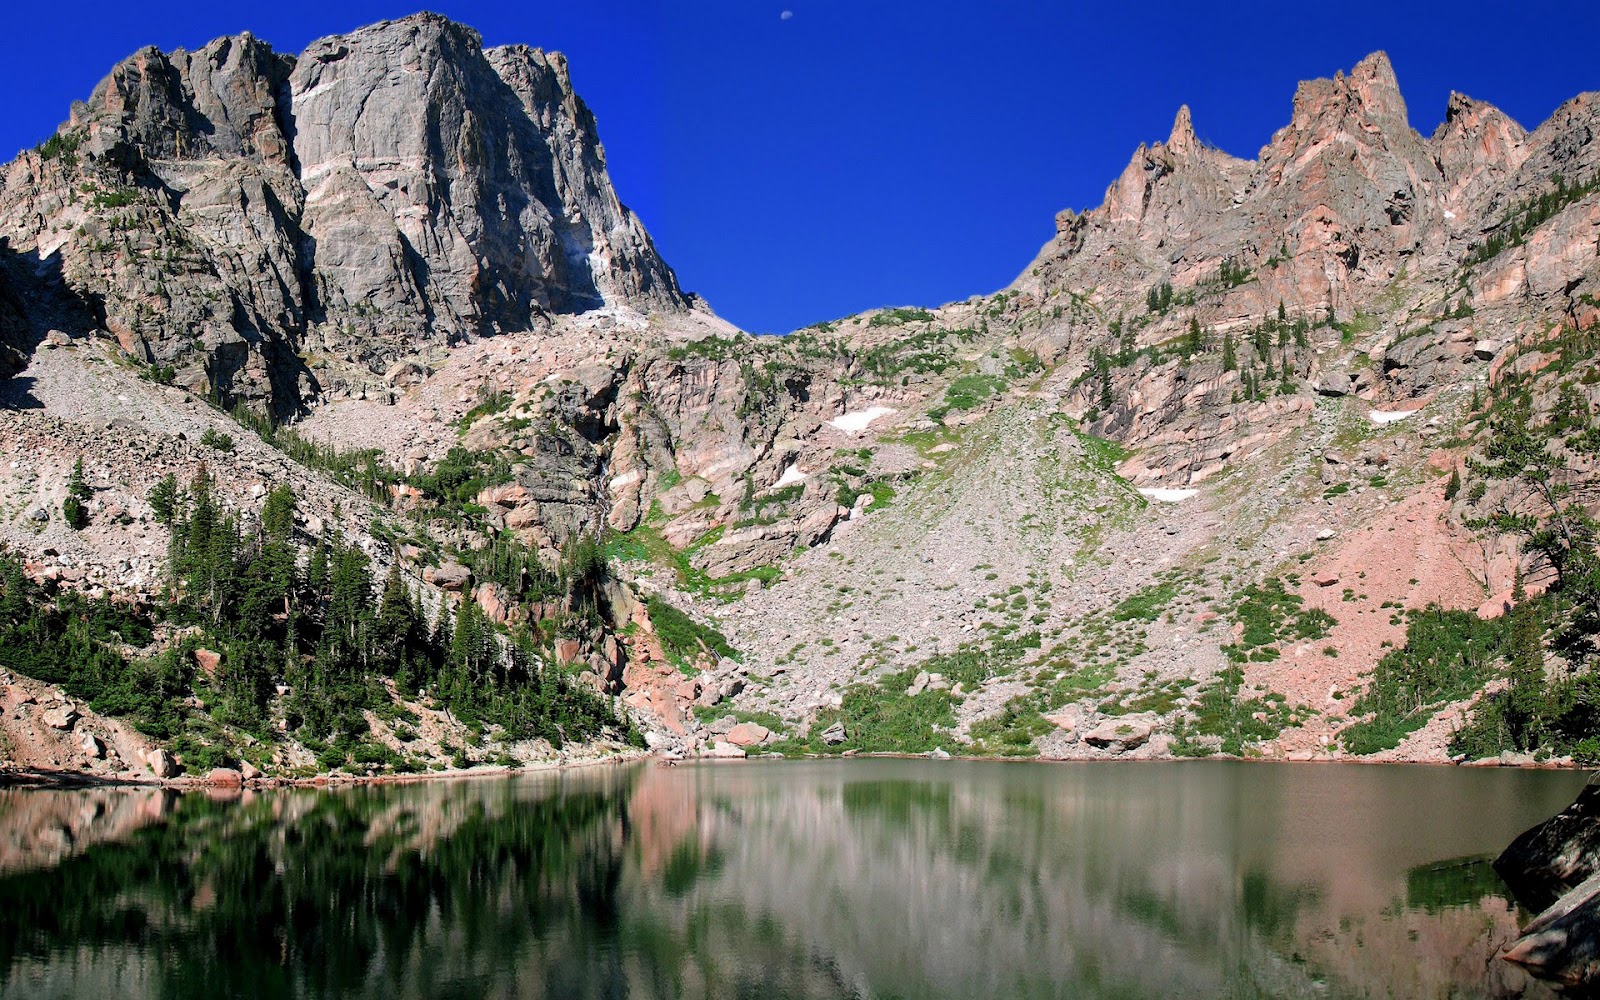 https://blogger.googleusercontent.com/img/b/R29vZ2xl/AVvXsEhM4hSeL_7t1iH6U5nSDBEojW7DDvAi1TQN8qTVh9TyzVkPBoYsFOqauhBvDNlP46FyCqsijM7Cexgk8OBfX4oddpoeEhRQyqpgb2hcwvQKYcFFdqfd195qAg7rRJq8RfEhR5ZJnwz3m3w8/s1600/Lake+in+the+Rock+Mountain.jpg